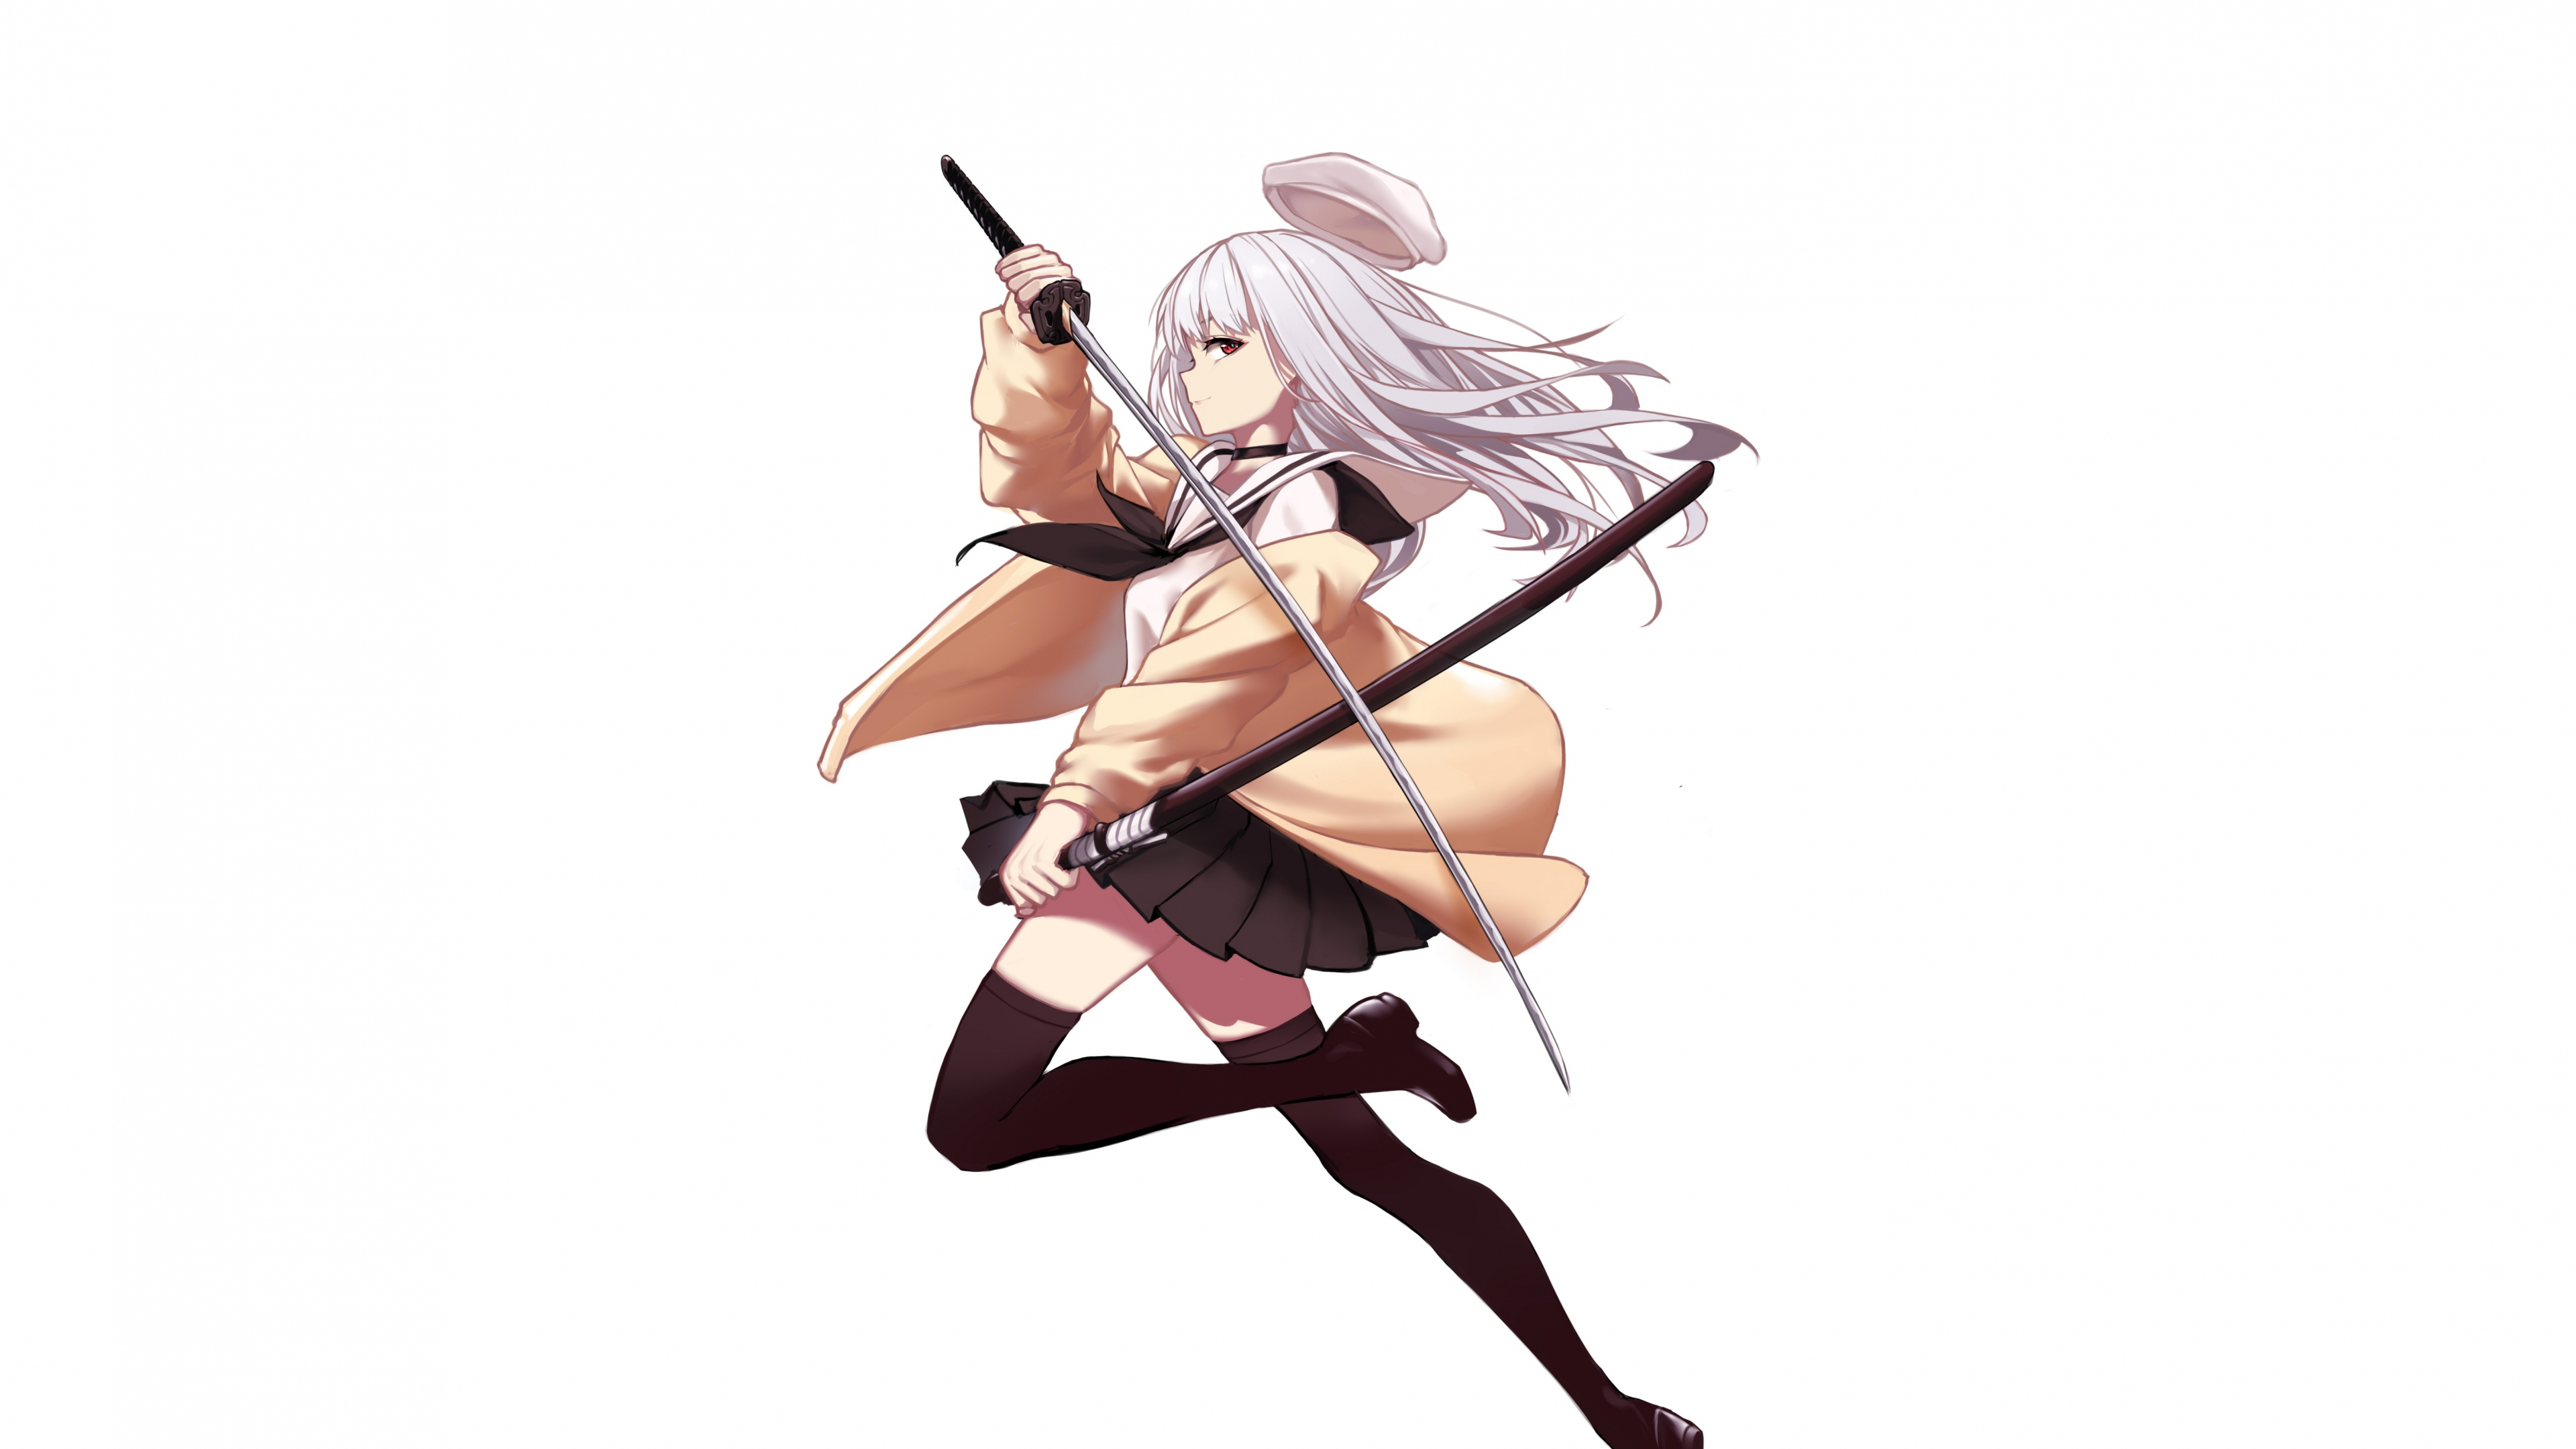 Download 3840x2160 Wallpaper Anime Girl And Her Katana Warrior